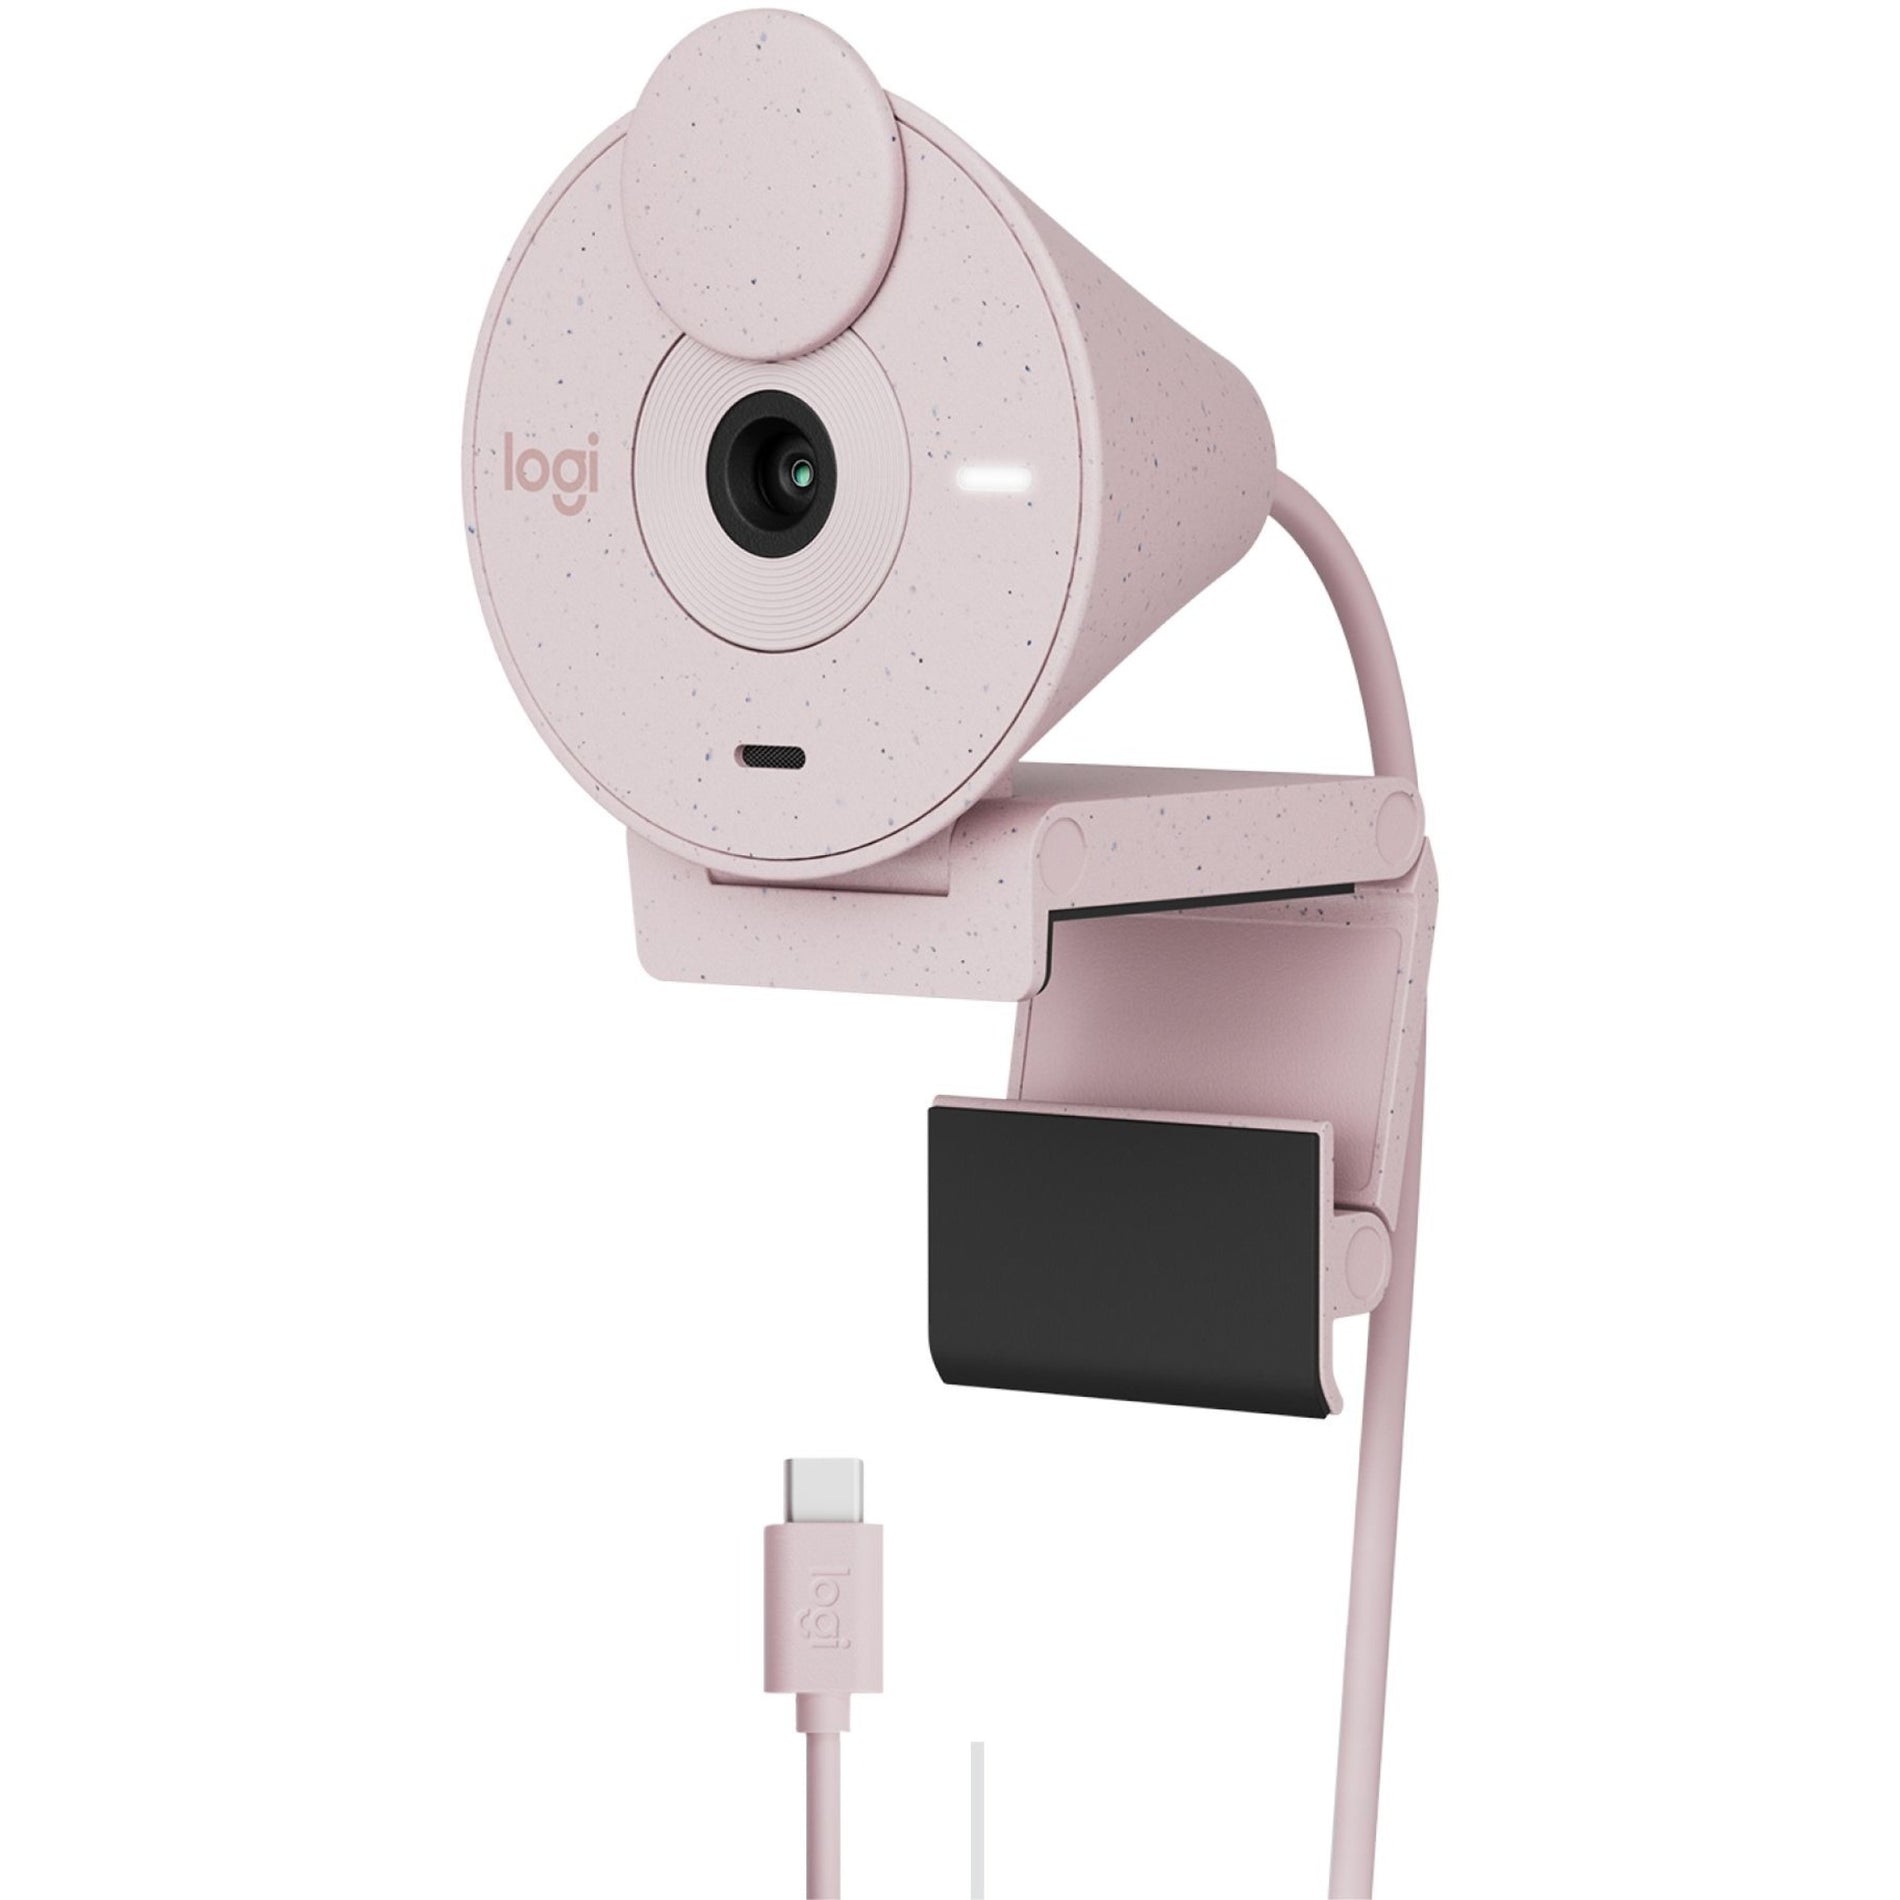 Logitech 960-001447 Brio 300 Webcam, High-Resolution Video Calls and Conferencing